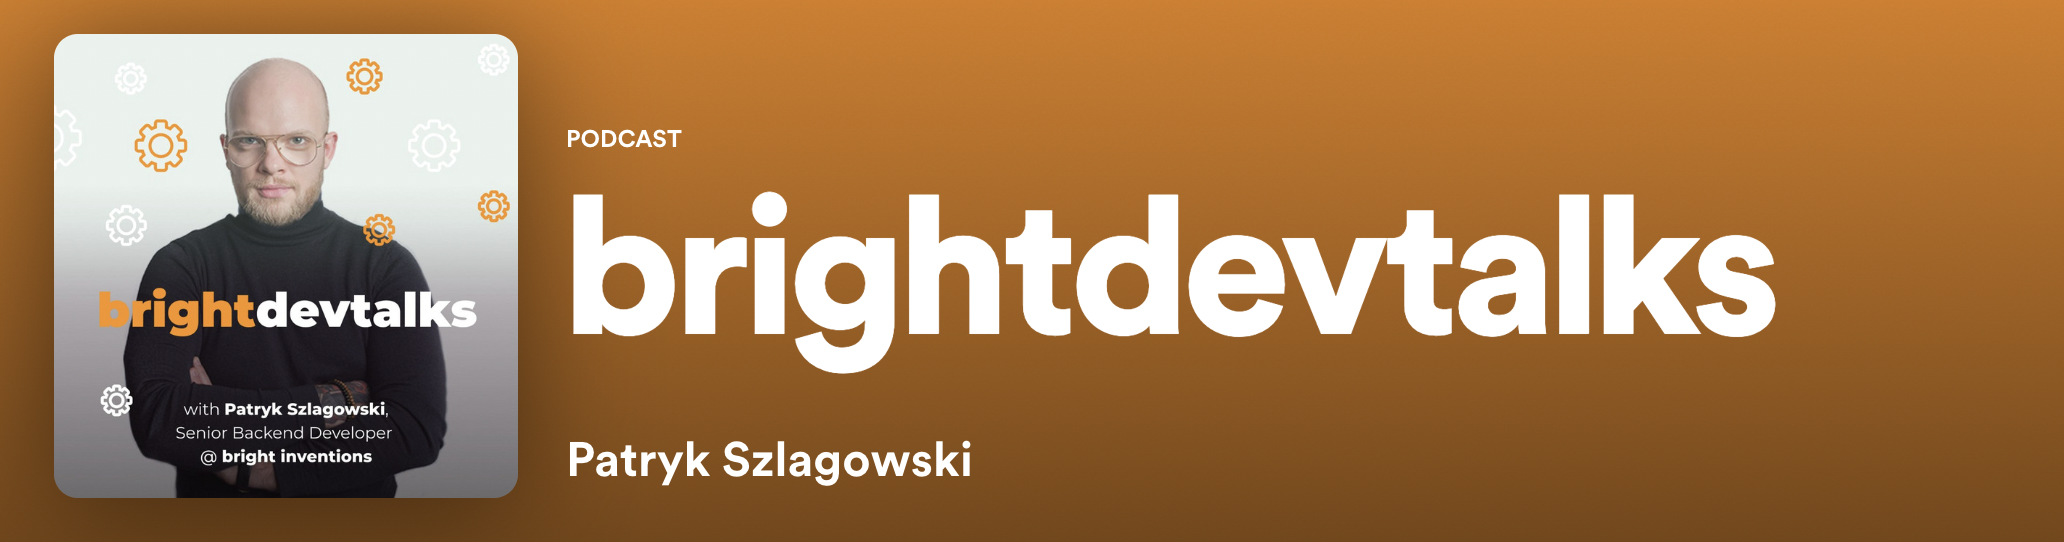 birghtdevtalks podcast